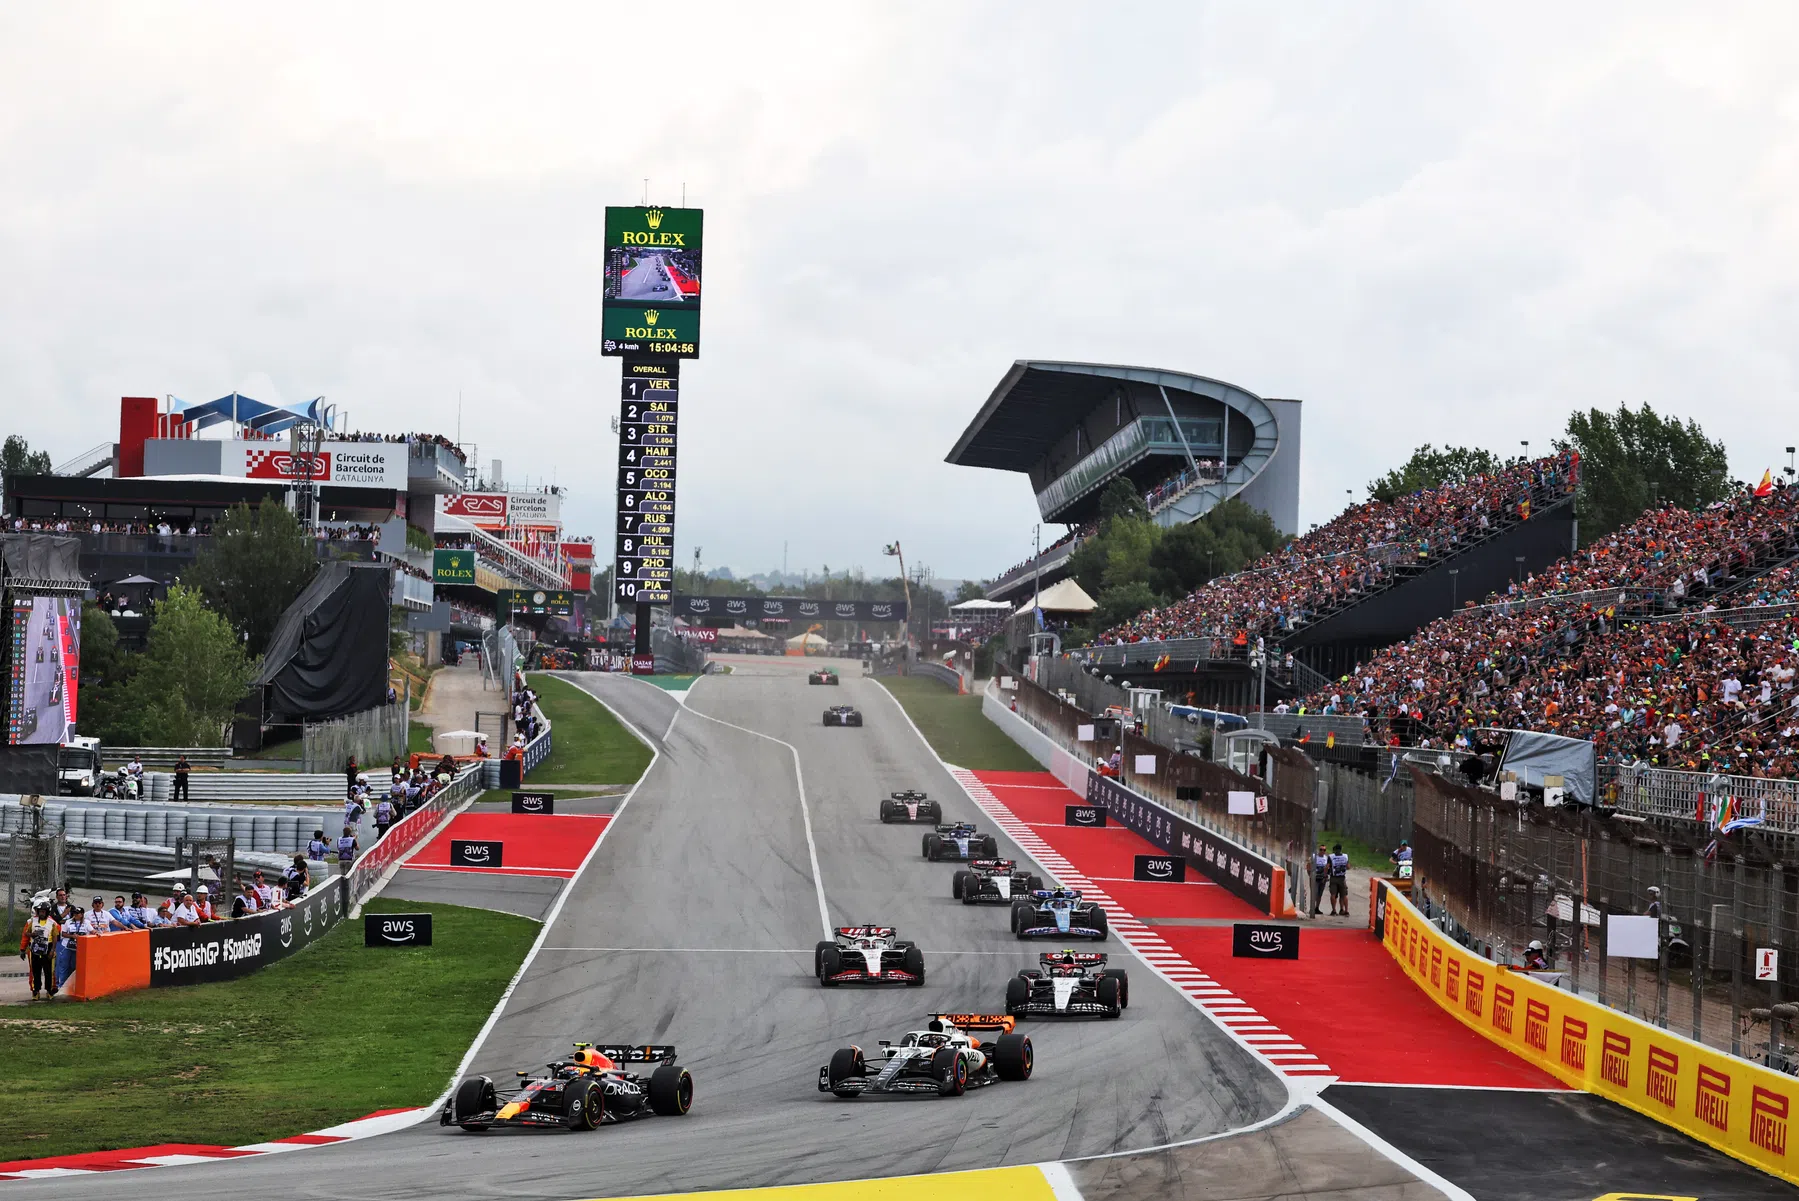 Spanish Grand Prix FP2 F1 live blog